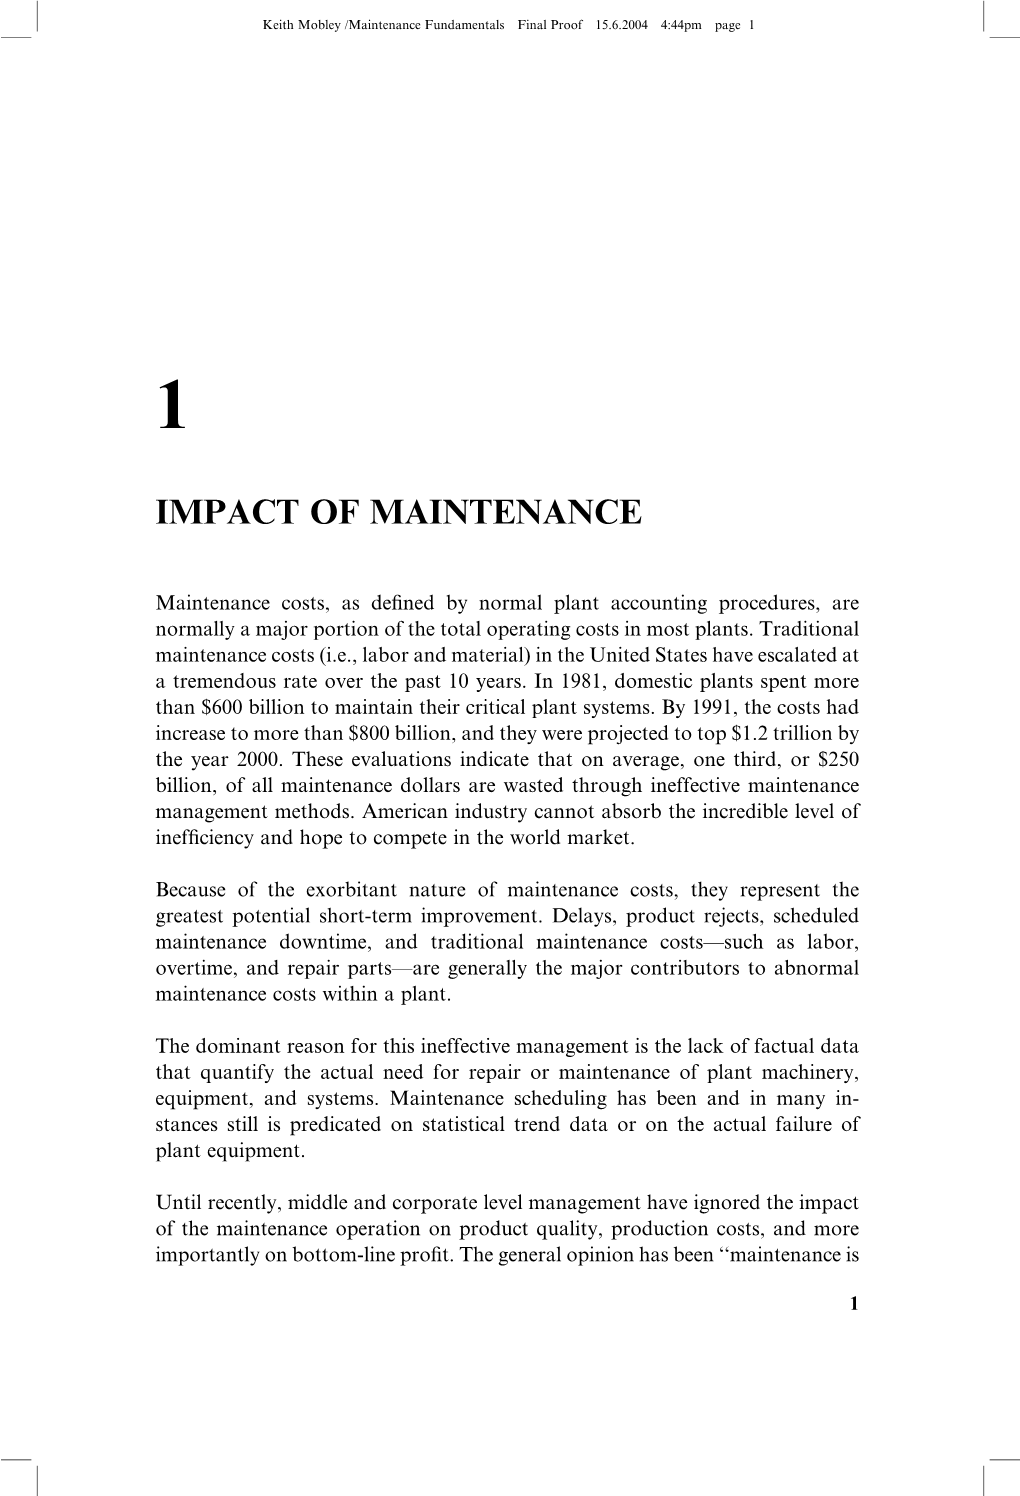 Impact of Maintenance